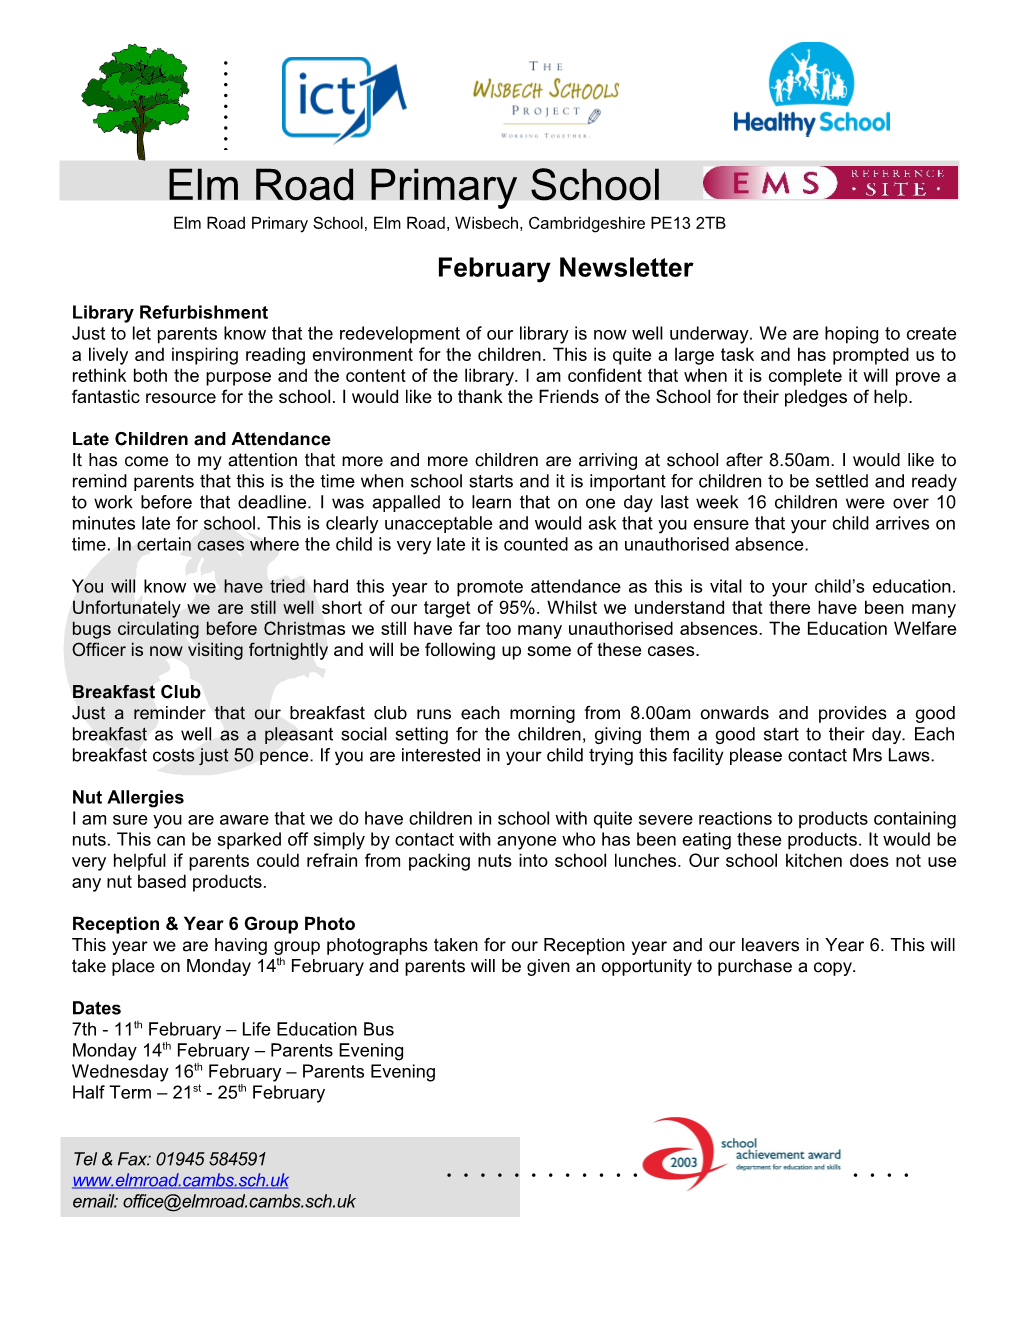 Elm Road Primary School, Elm Road, Wisbech, Cambridgeshire PE13 2TB